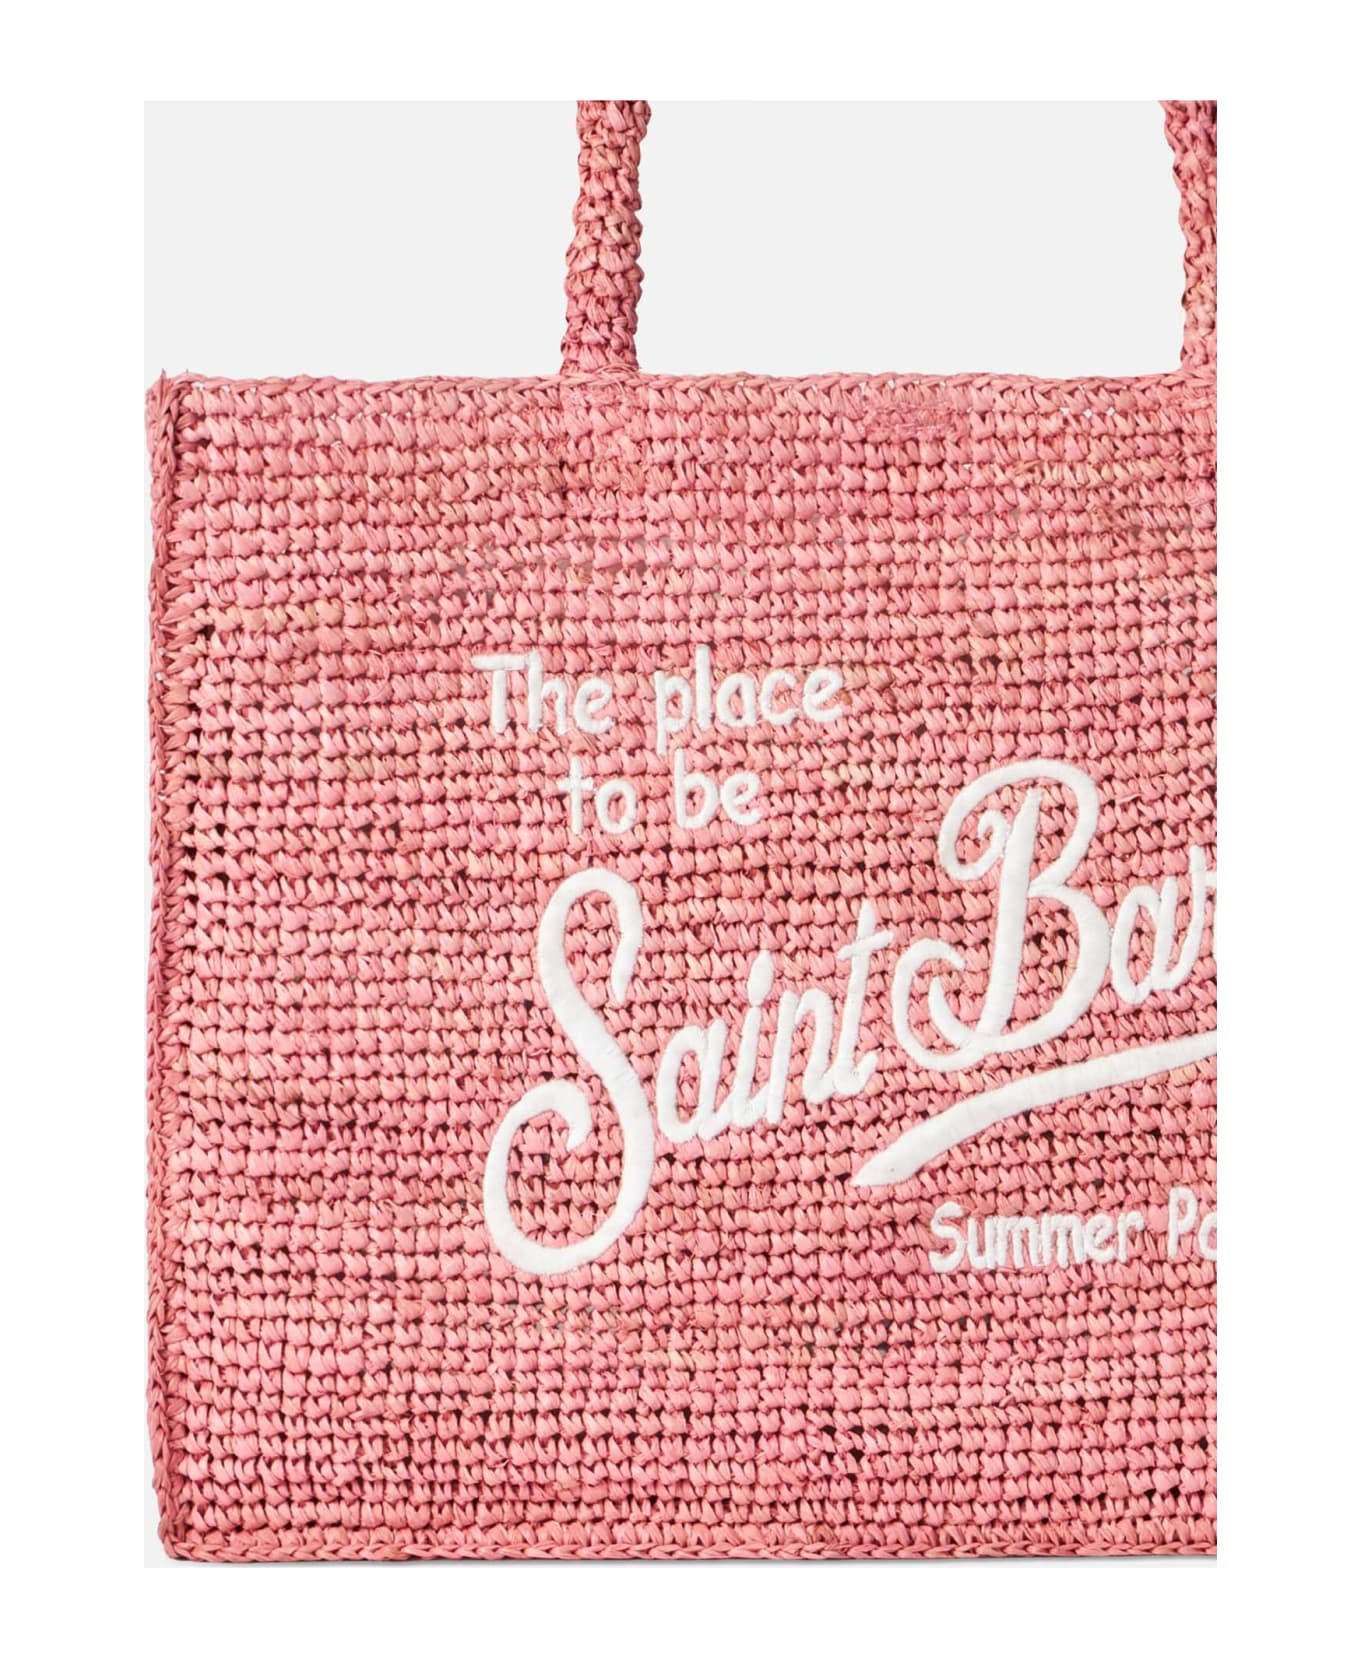 MC2 Saint Barth Vanity Pink Raffia Bag With Saint Barth Embroidery - PINK